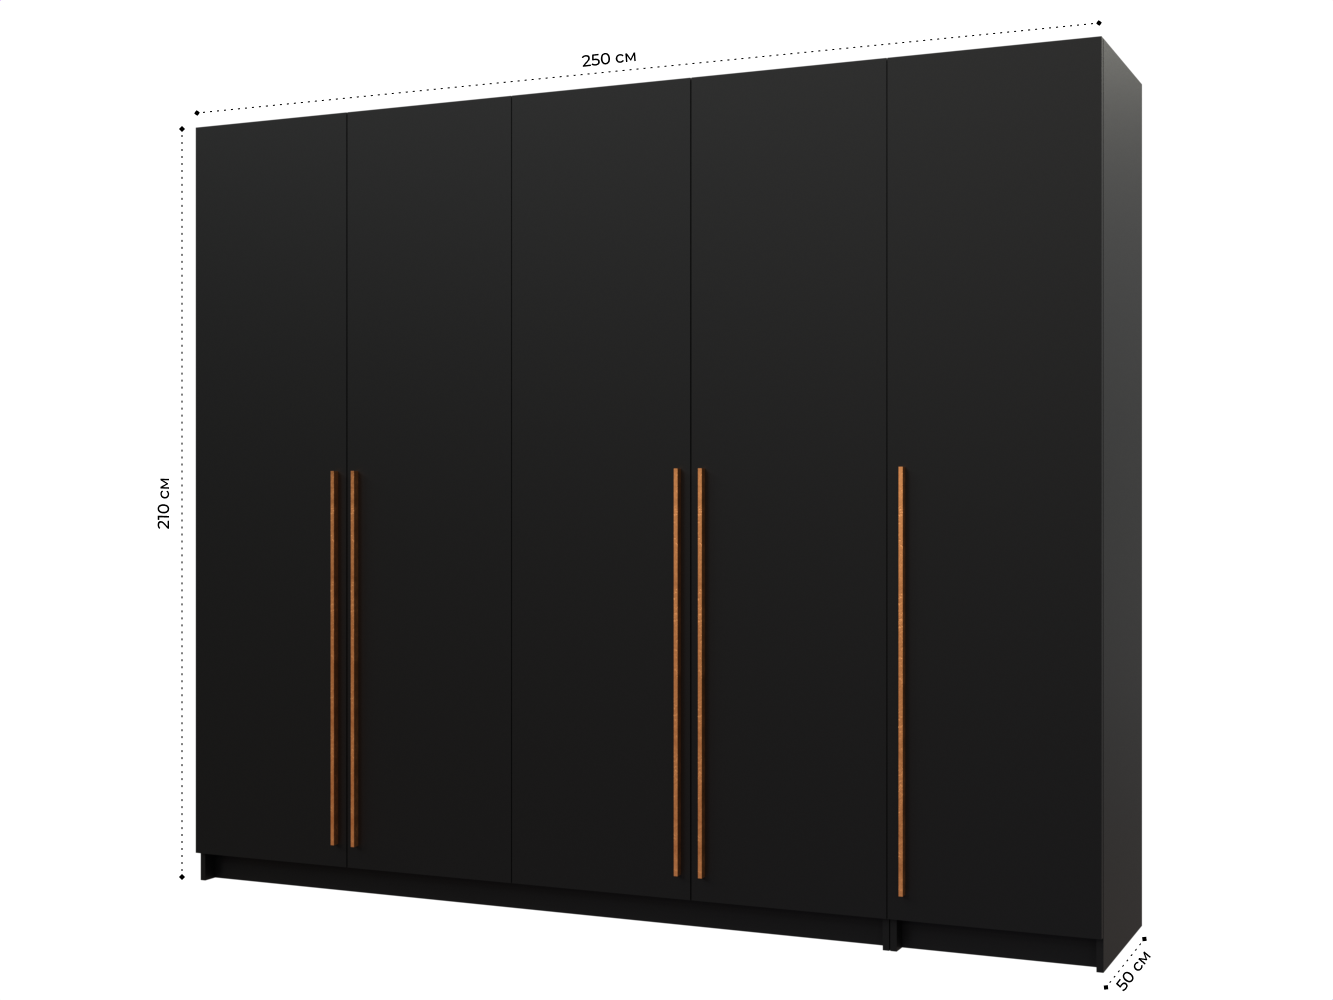 Распашной шкаф Пакс Фардал 98 black ИКЕА (IKEA) изображение товара